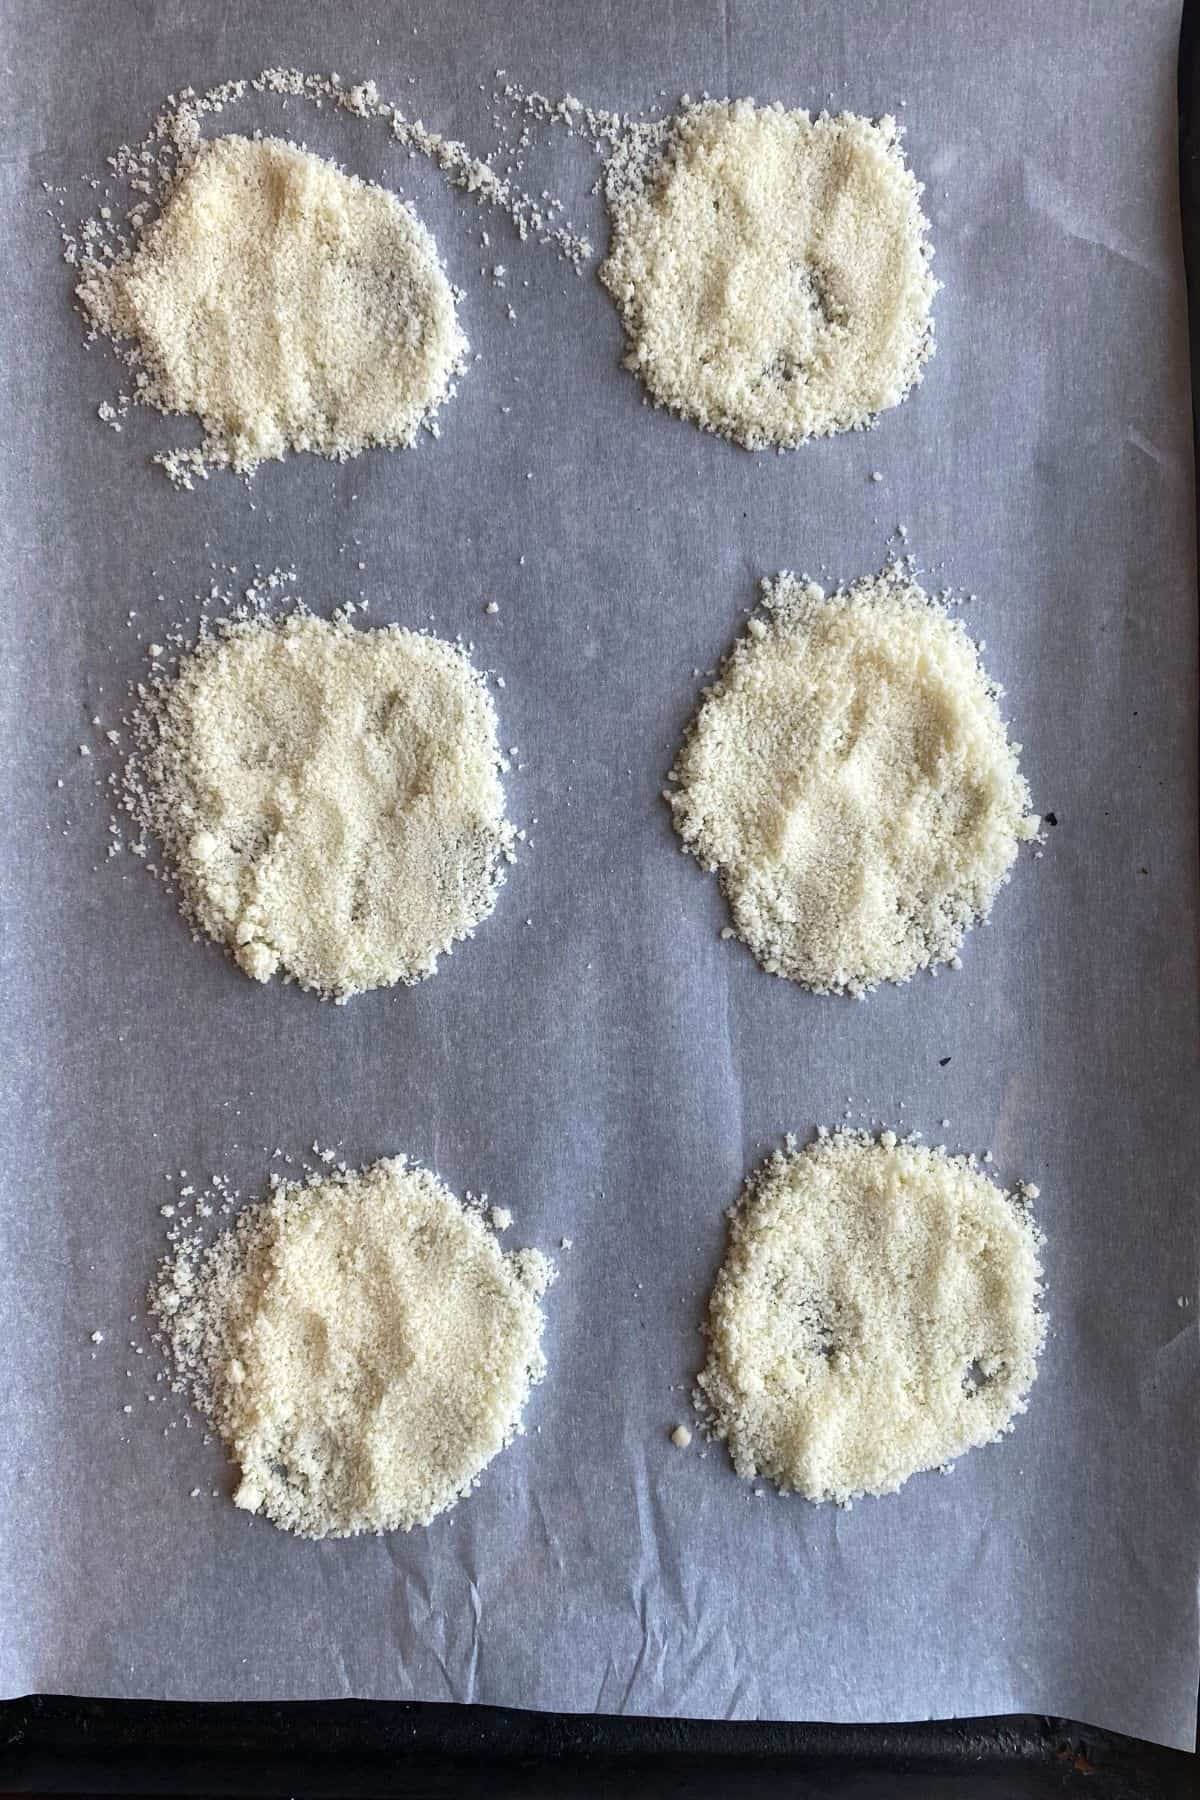 Parmesan pressed into a pan to make crisps